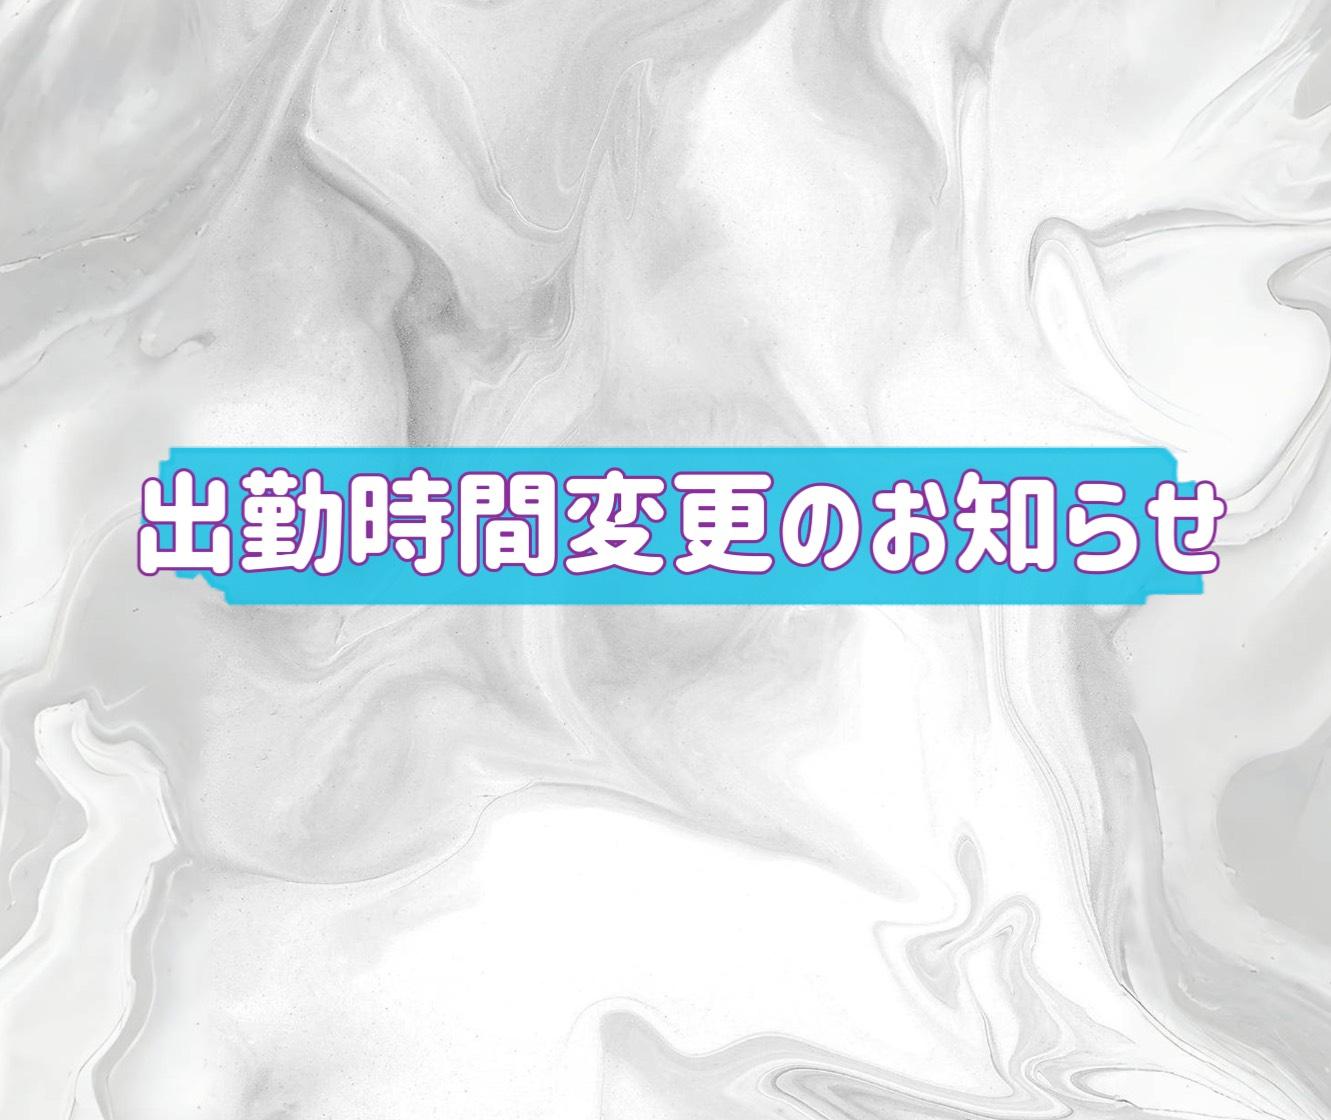 変更（т-т）<img class="emojione" alt="💦" title=":sweat_drops:" src="https://fuzoku.jp/assets/img/emojione/1f4a6.png"/>